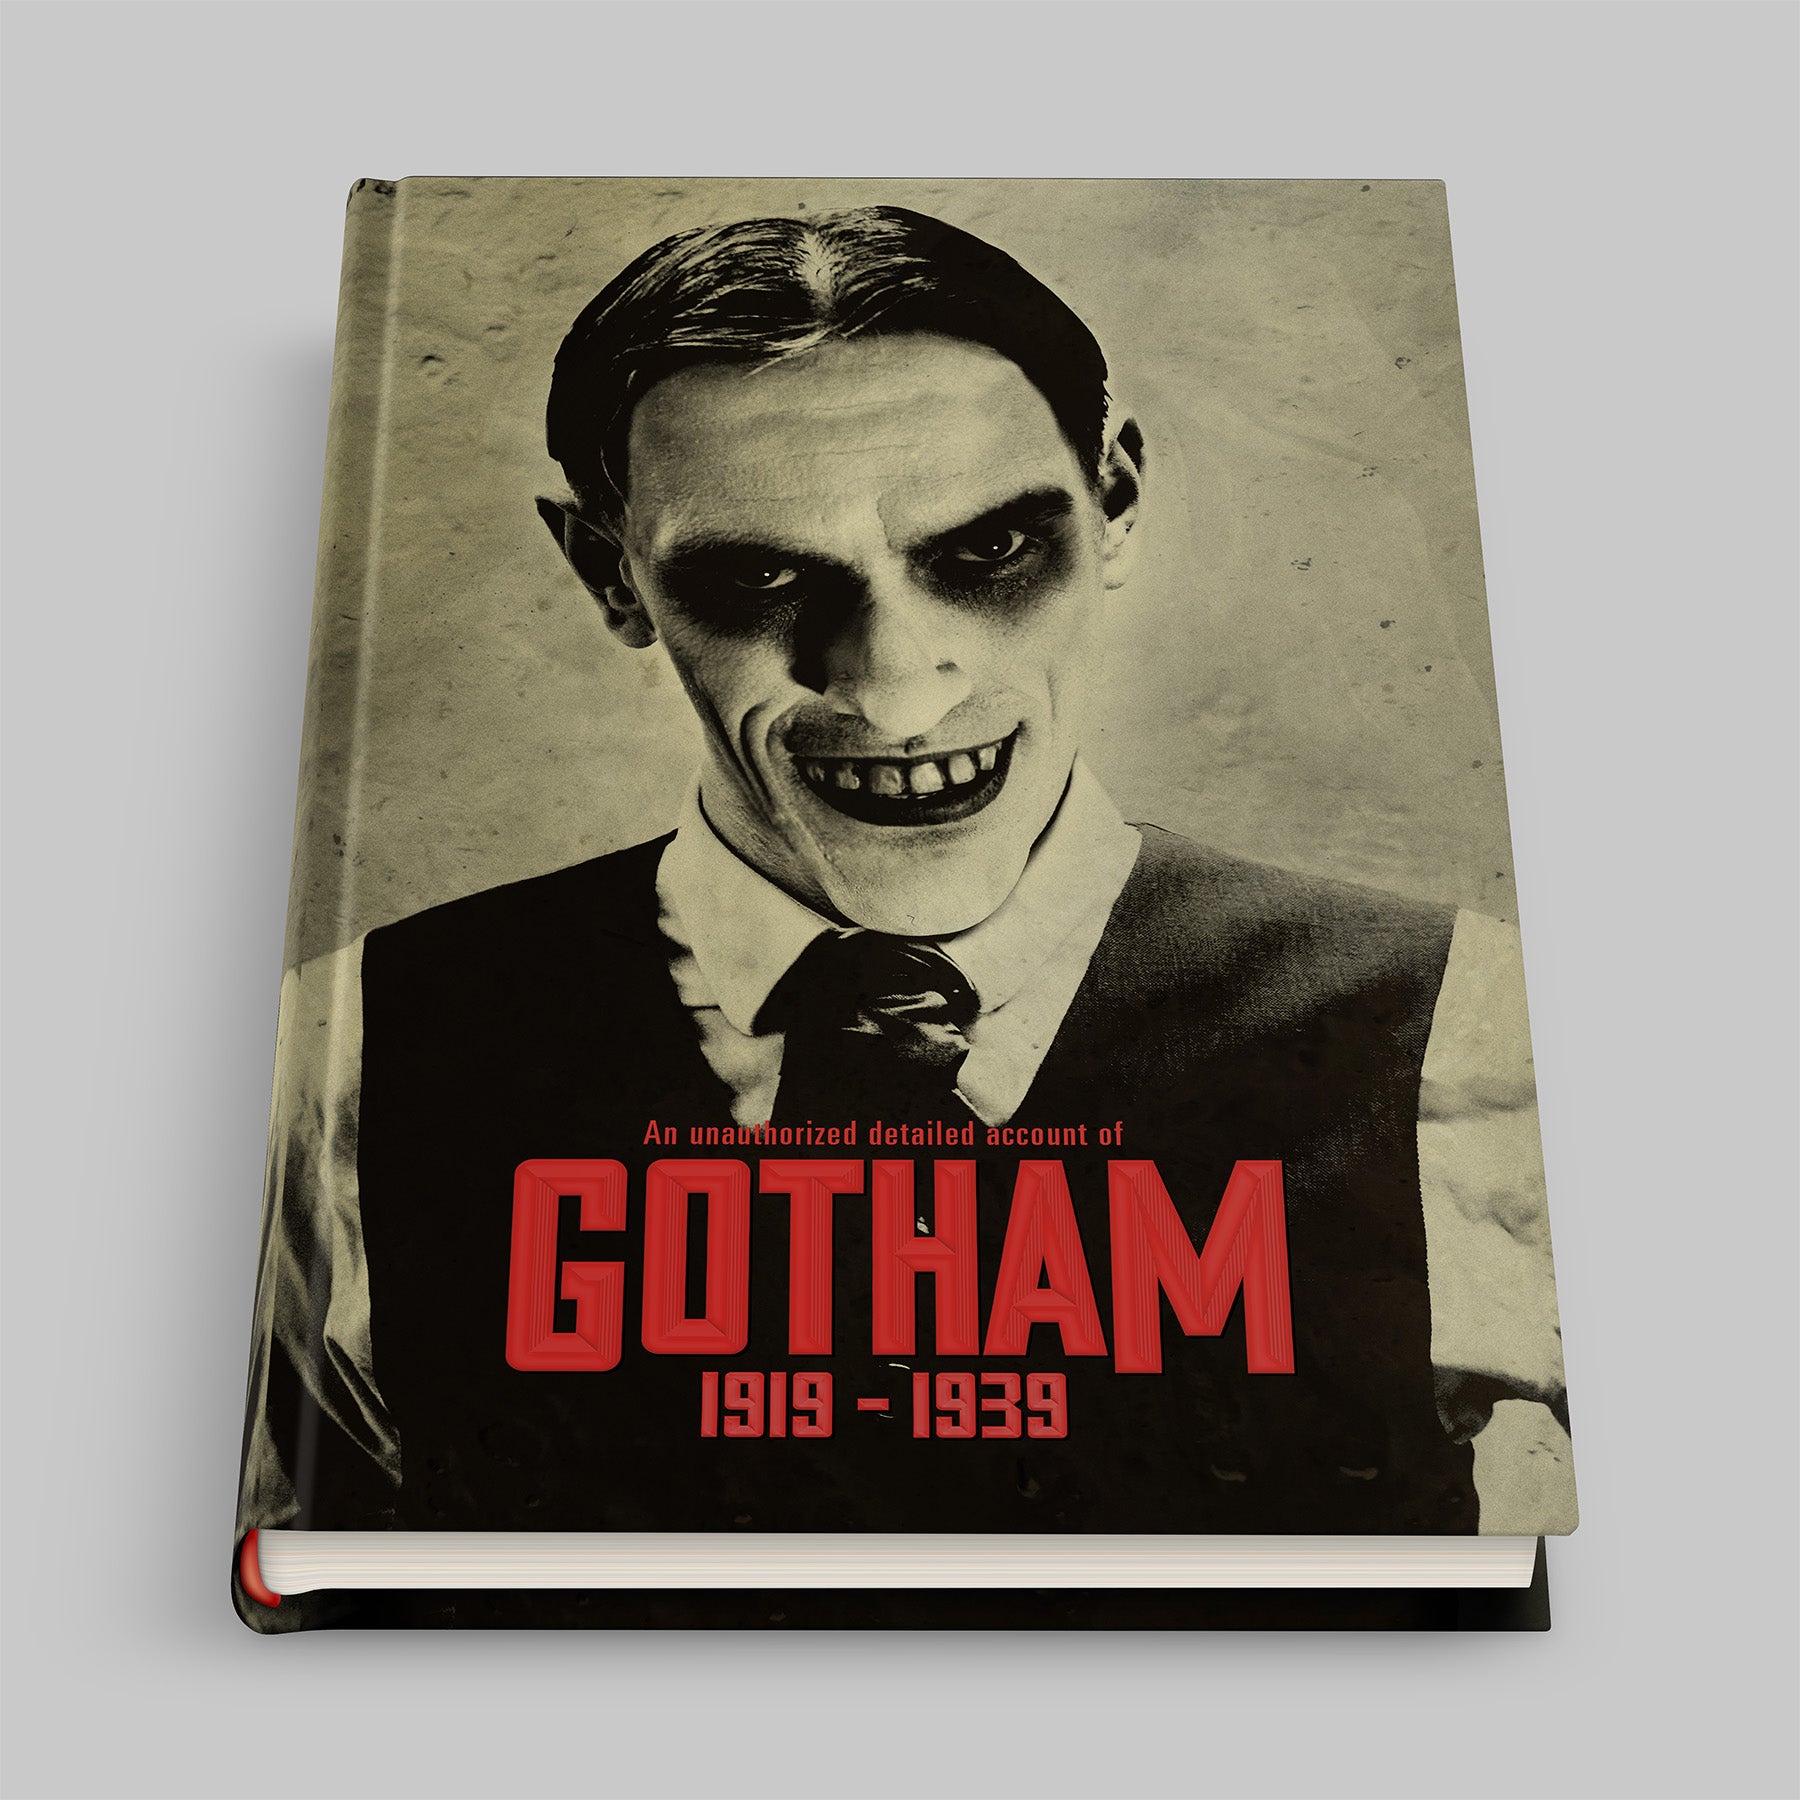 Pre-order Gotham: 1919 - 1939 (Second Edition)